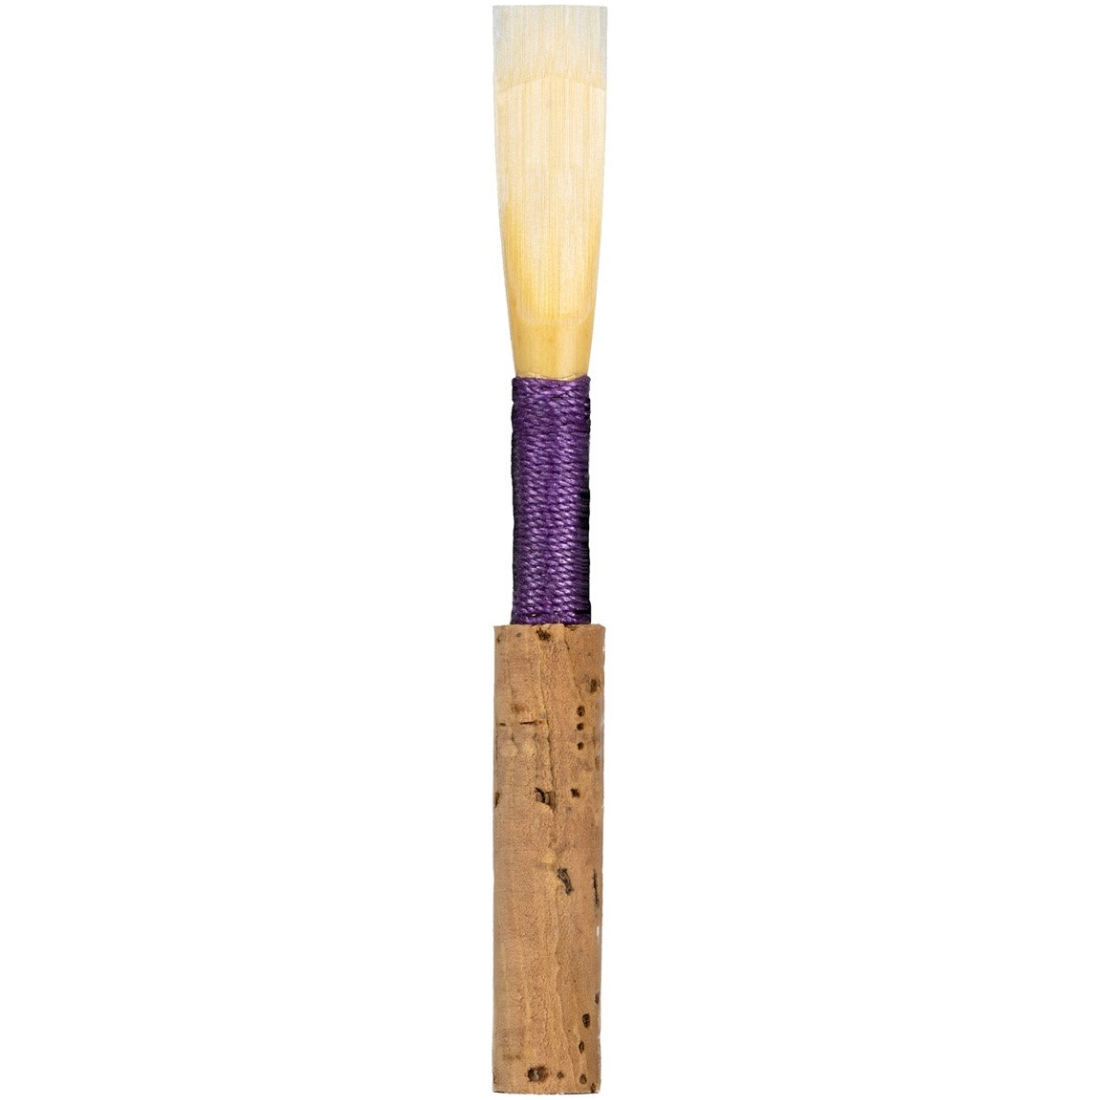 Jones Artist series Oboe Reed cane wound with purple string - strength of Medium Hard